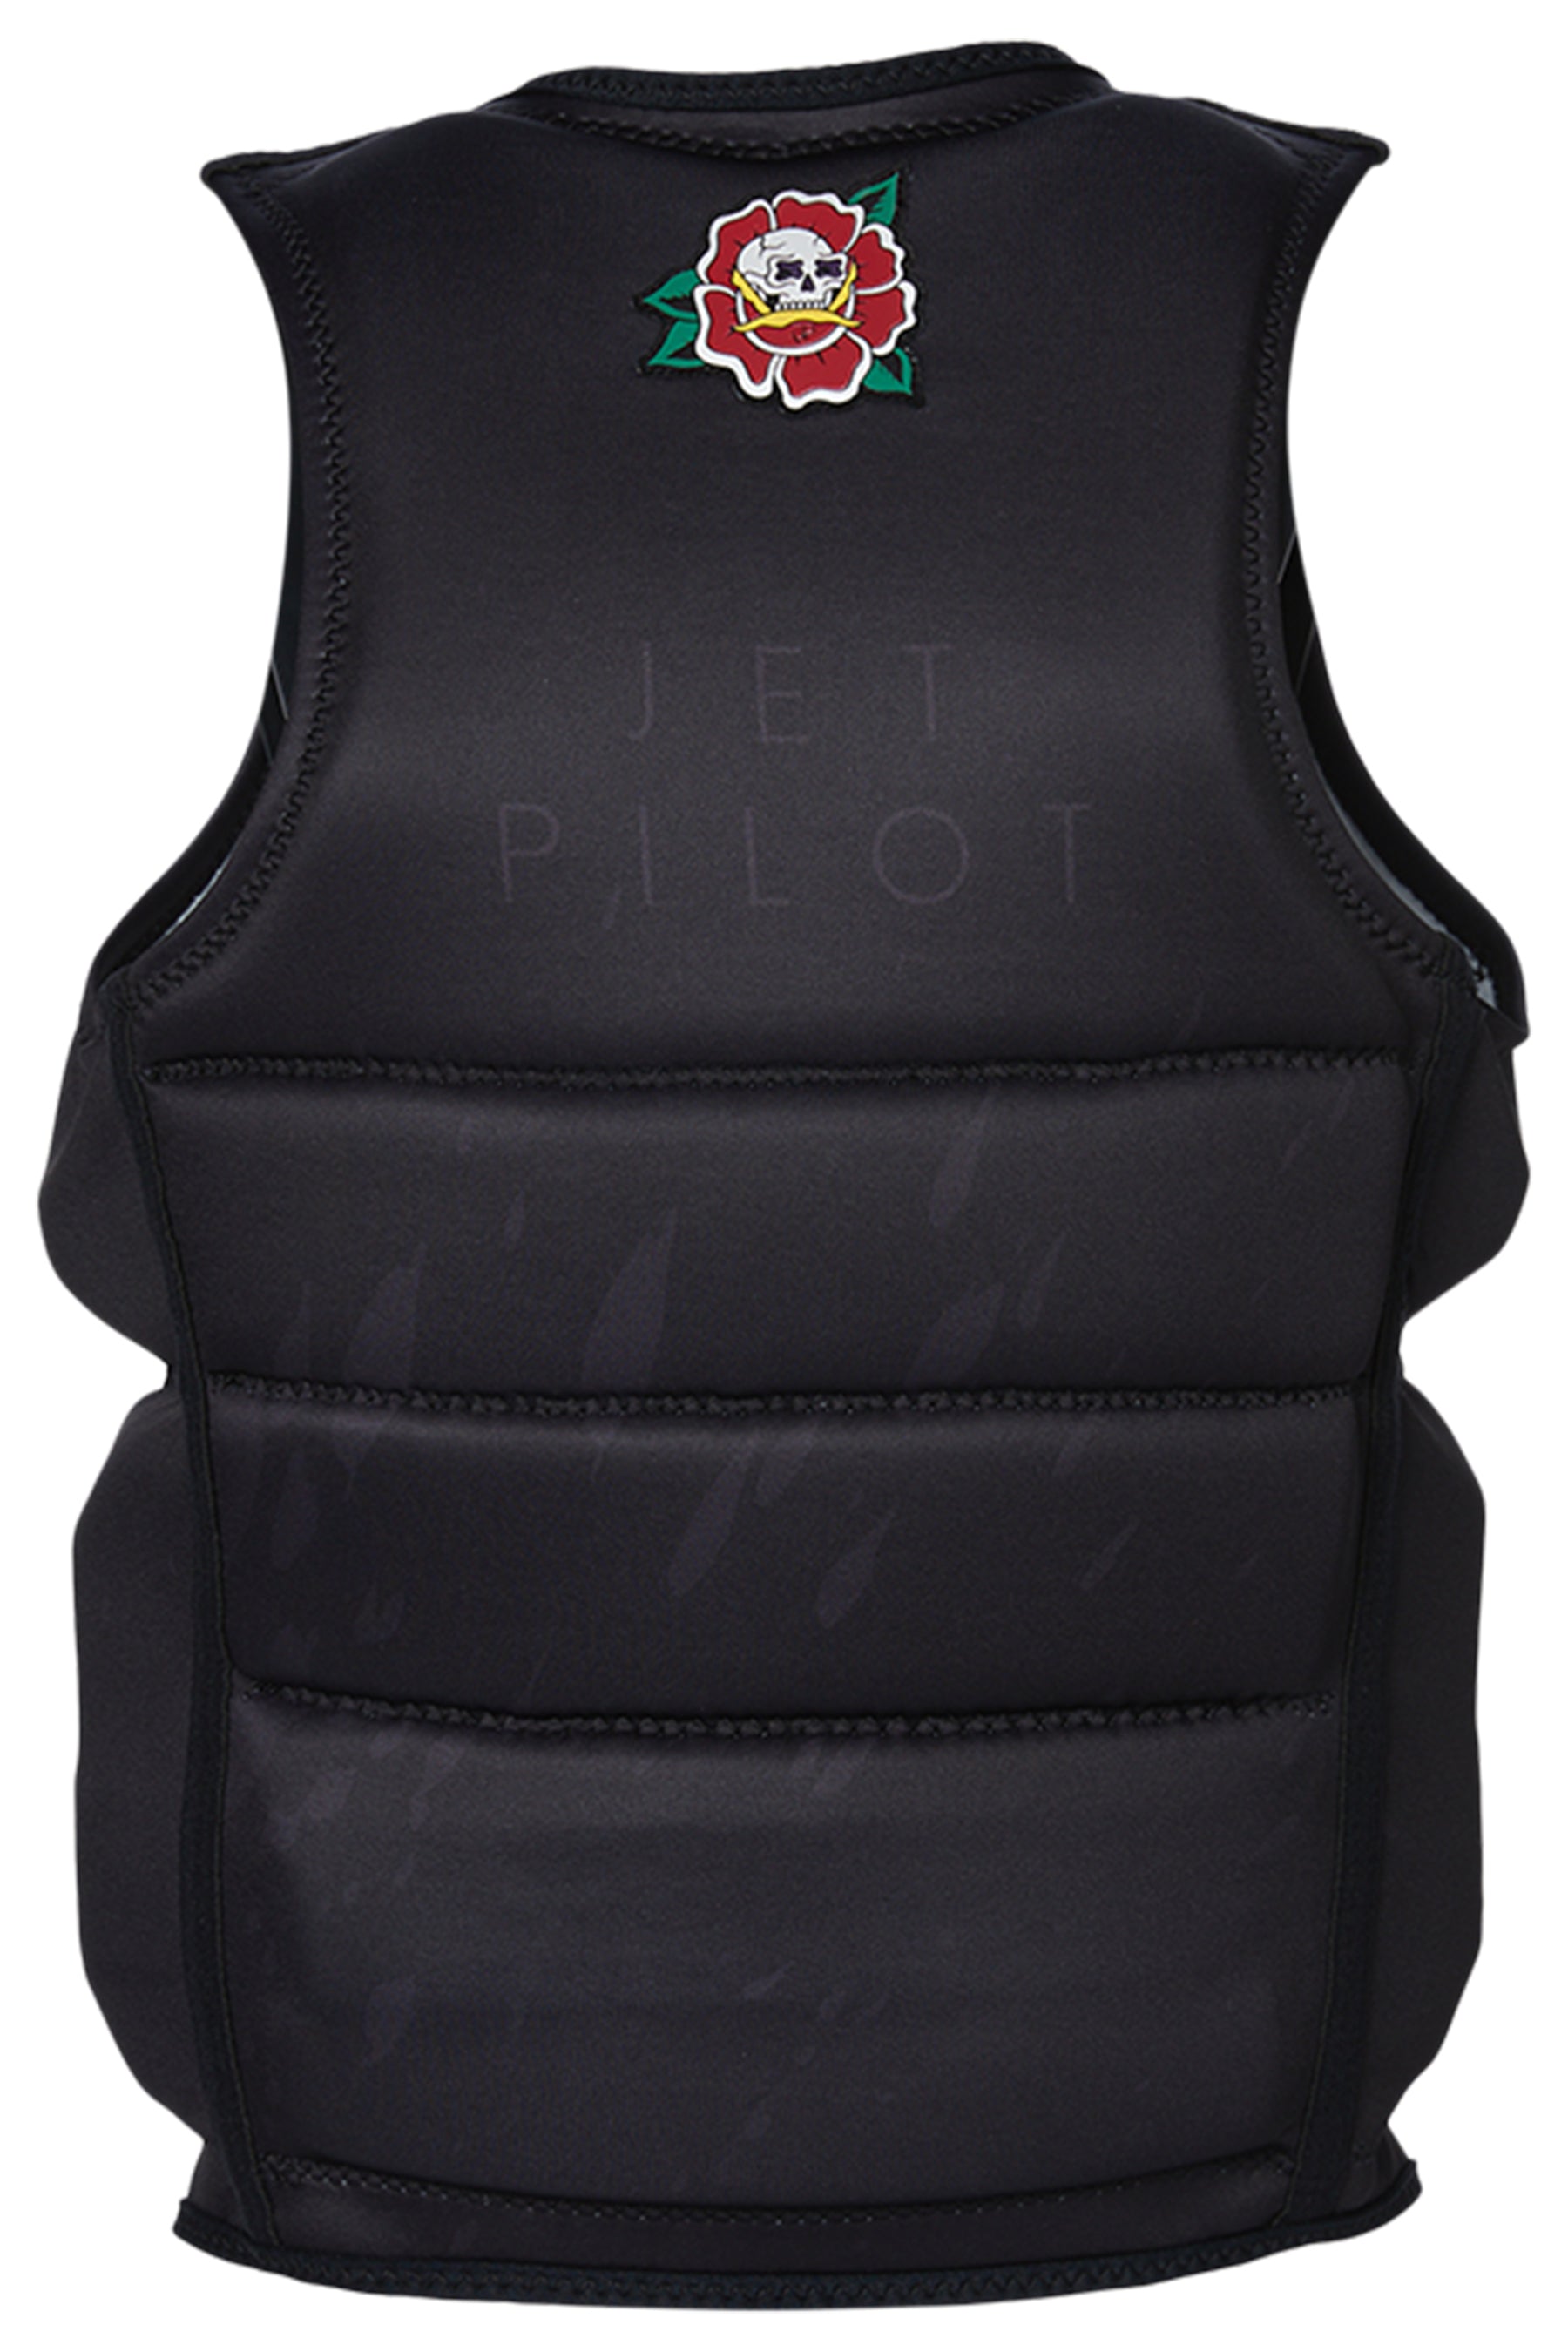 Jetpilot X1 Boys Youth Life Jacket Black 4